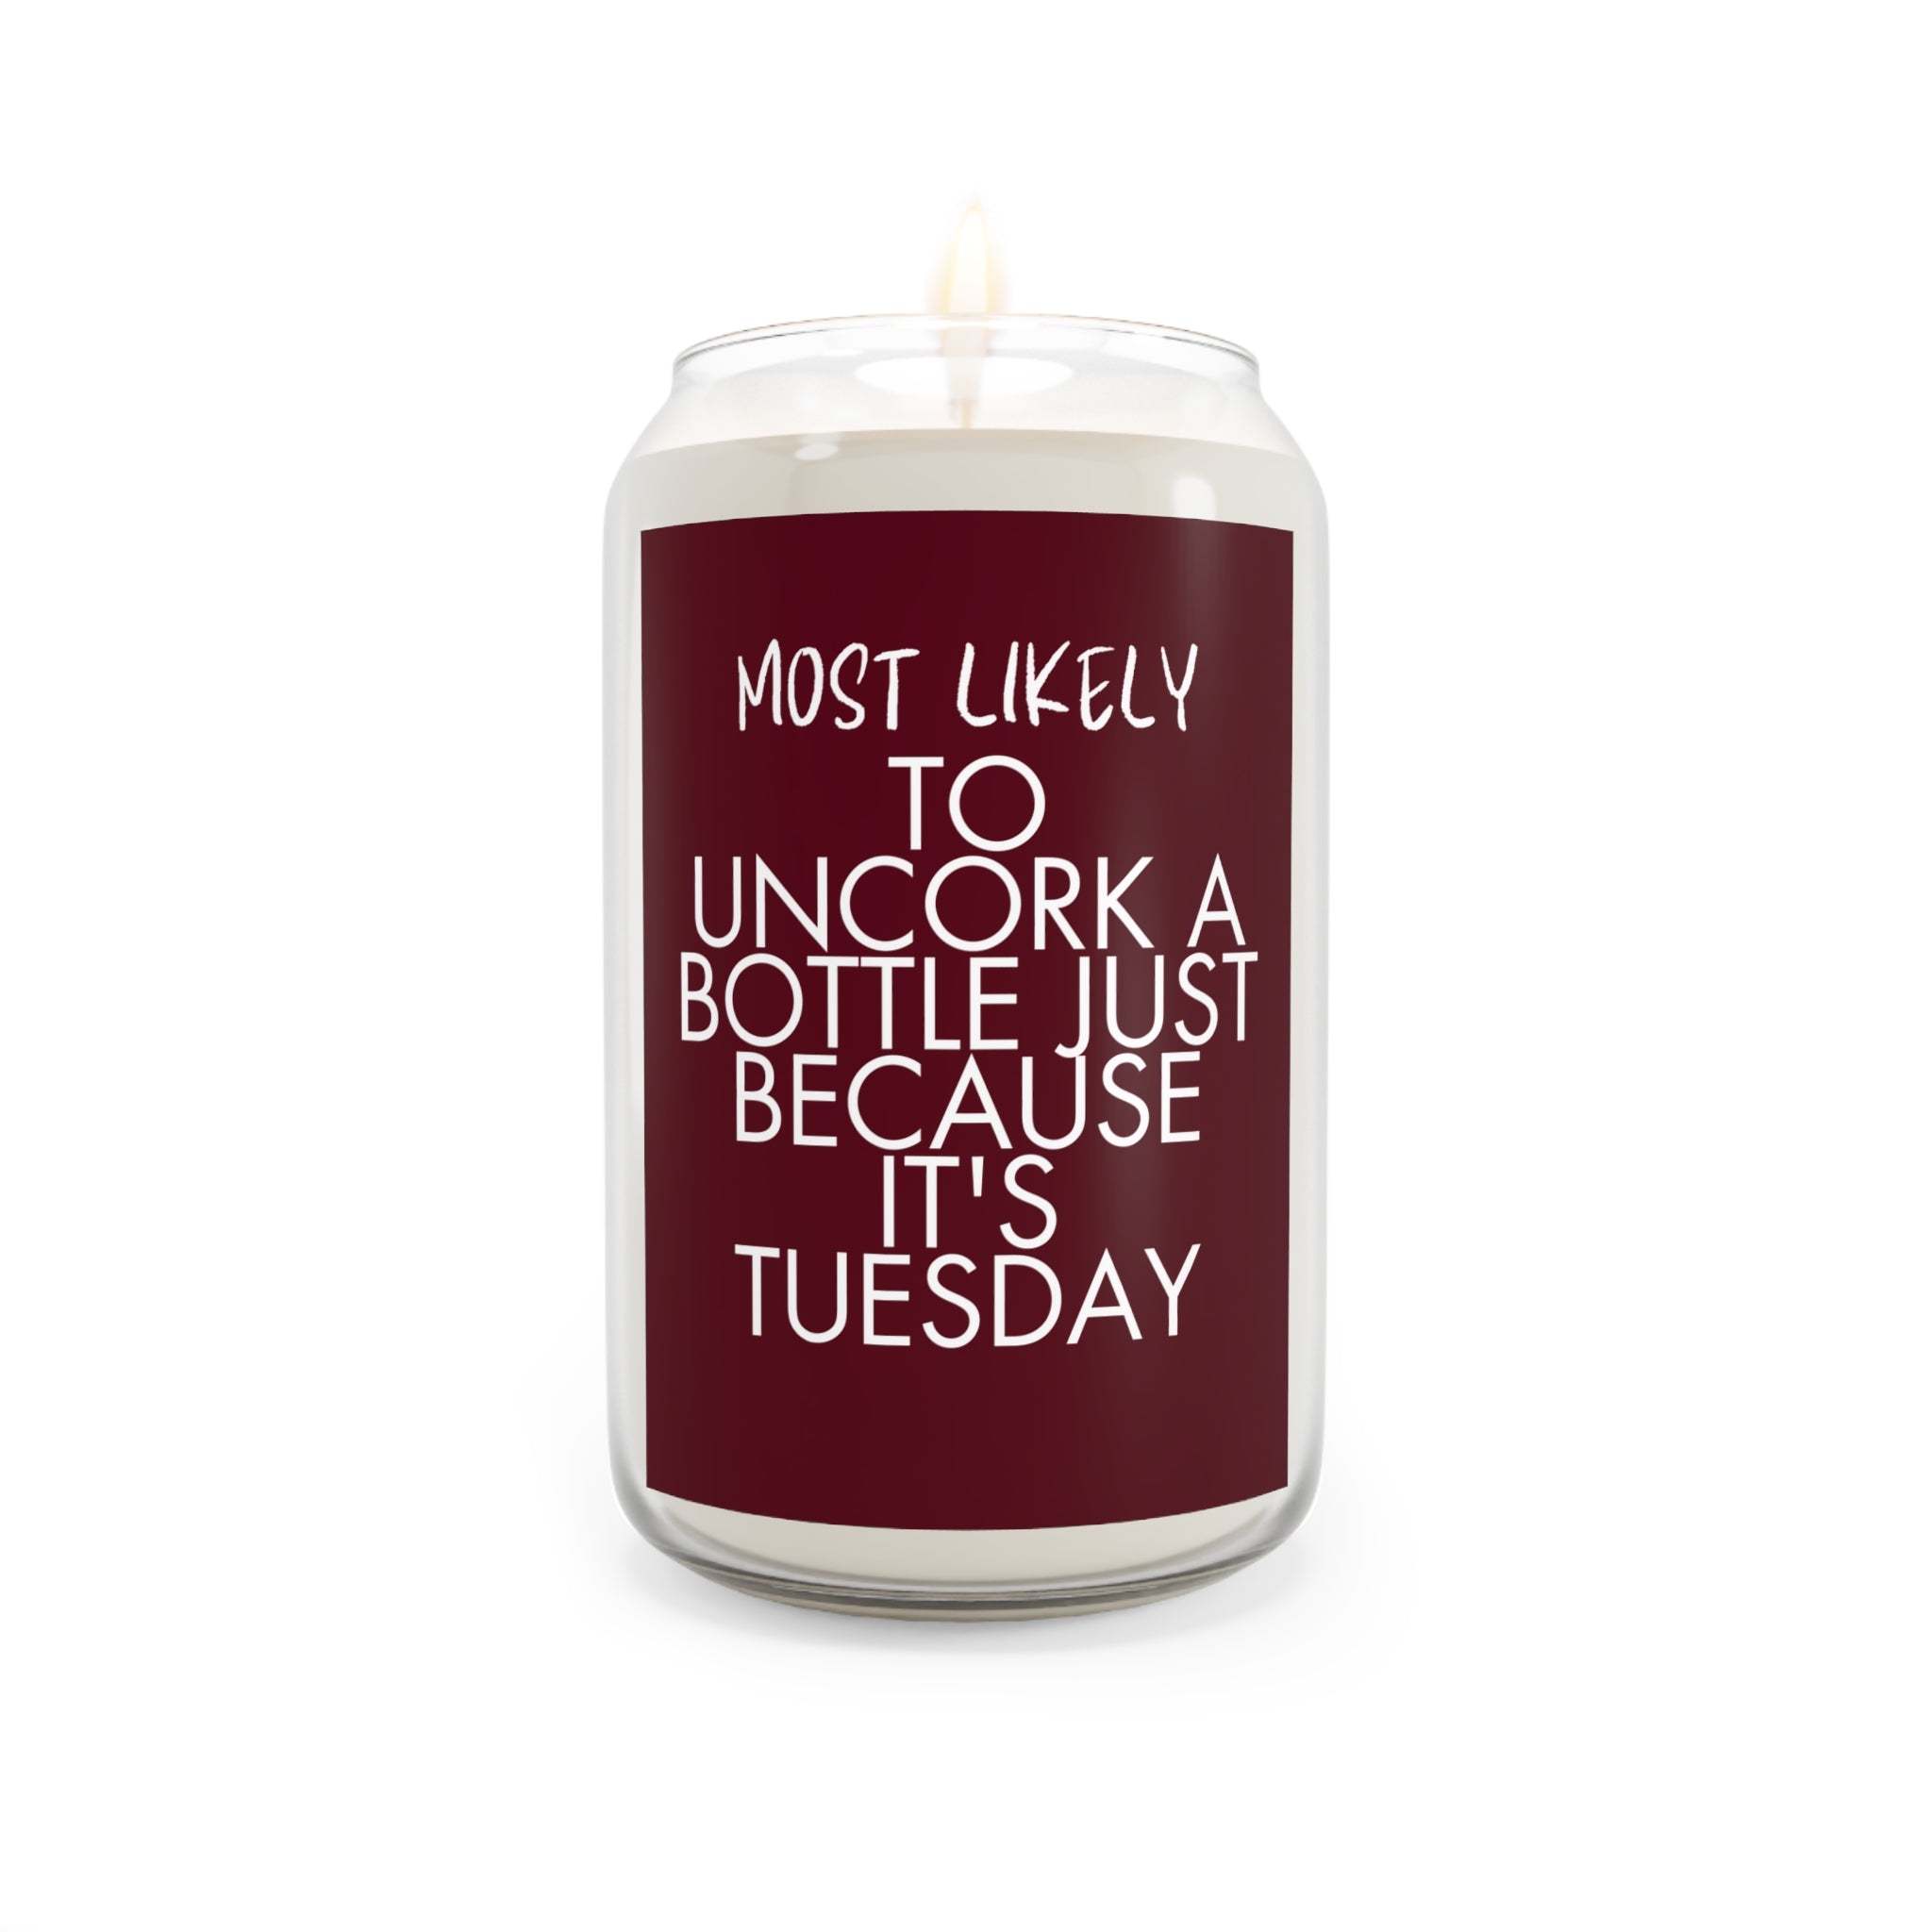 It’s Tuesday Wine Candle - Vanilla Bean / 13.75oz Home Decor